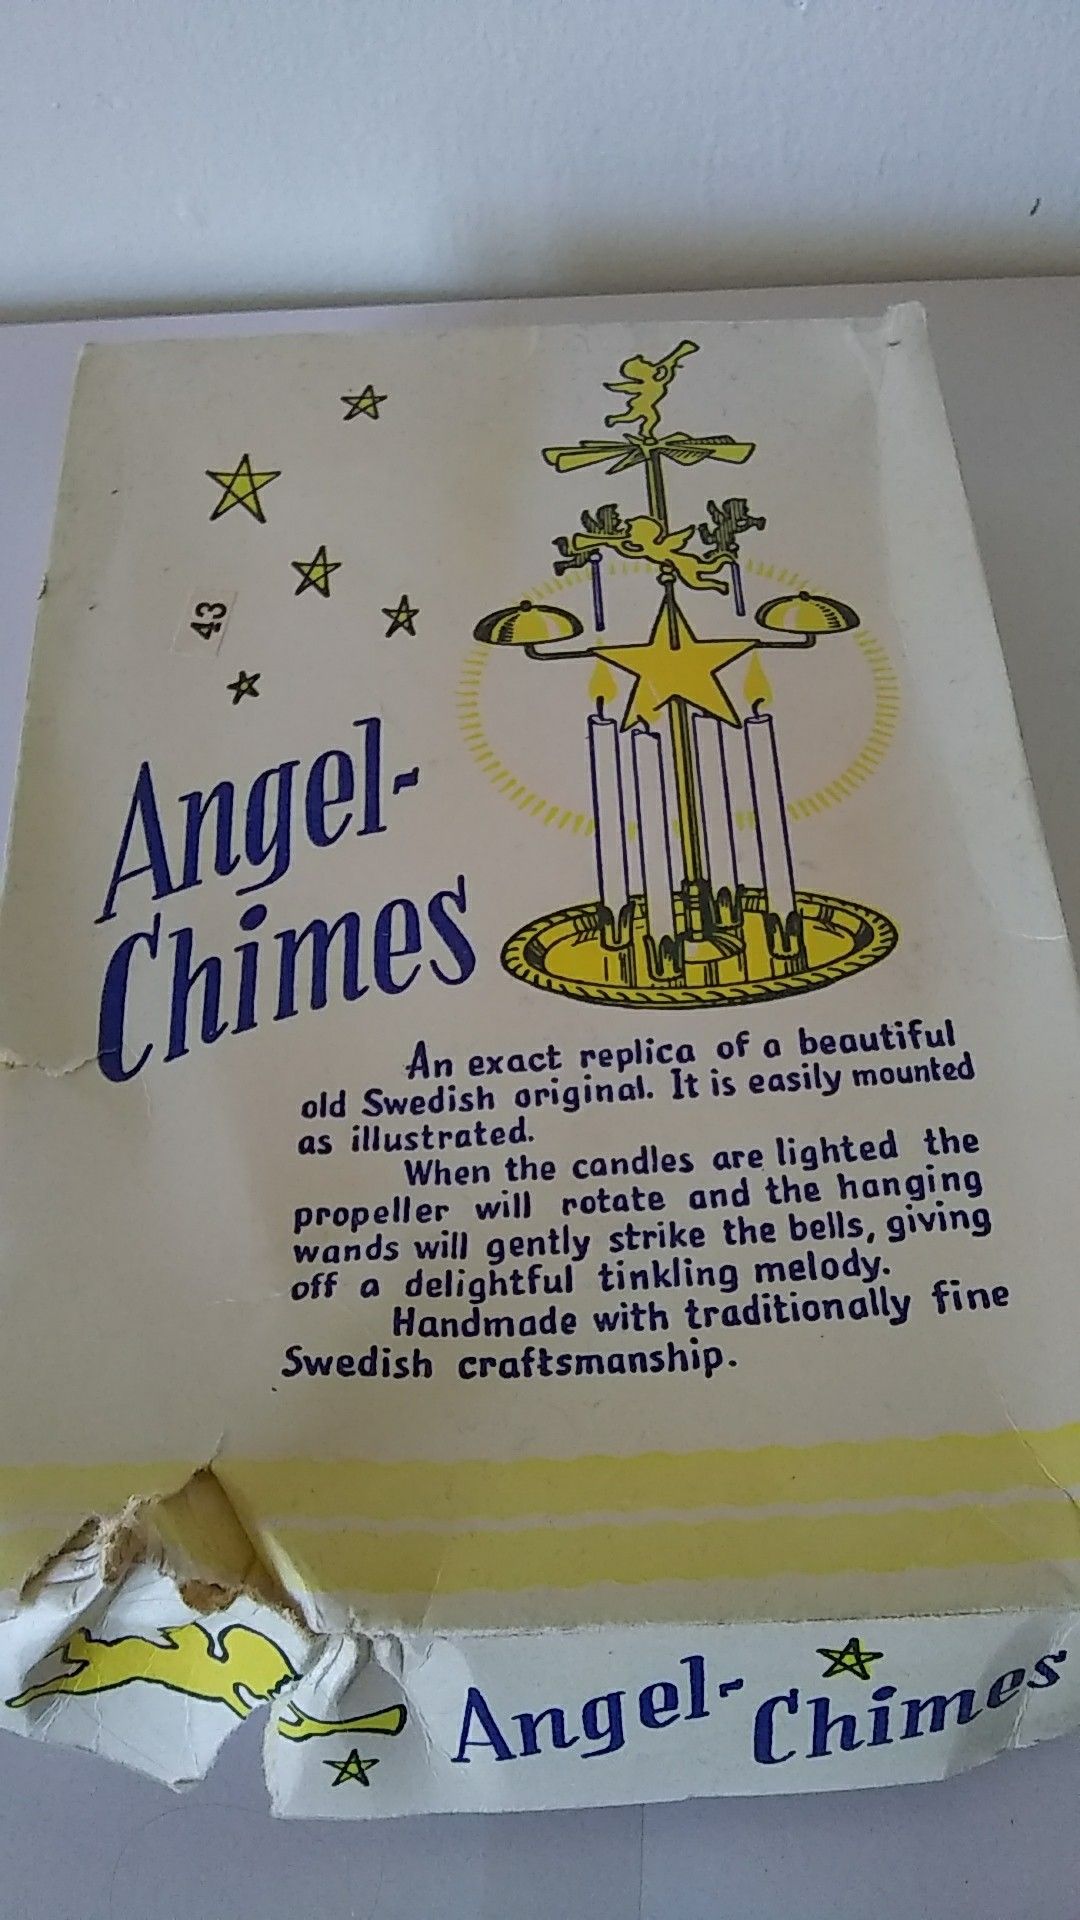 Vintage Angel-Chimes made in Sweden